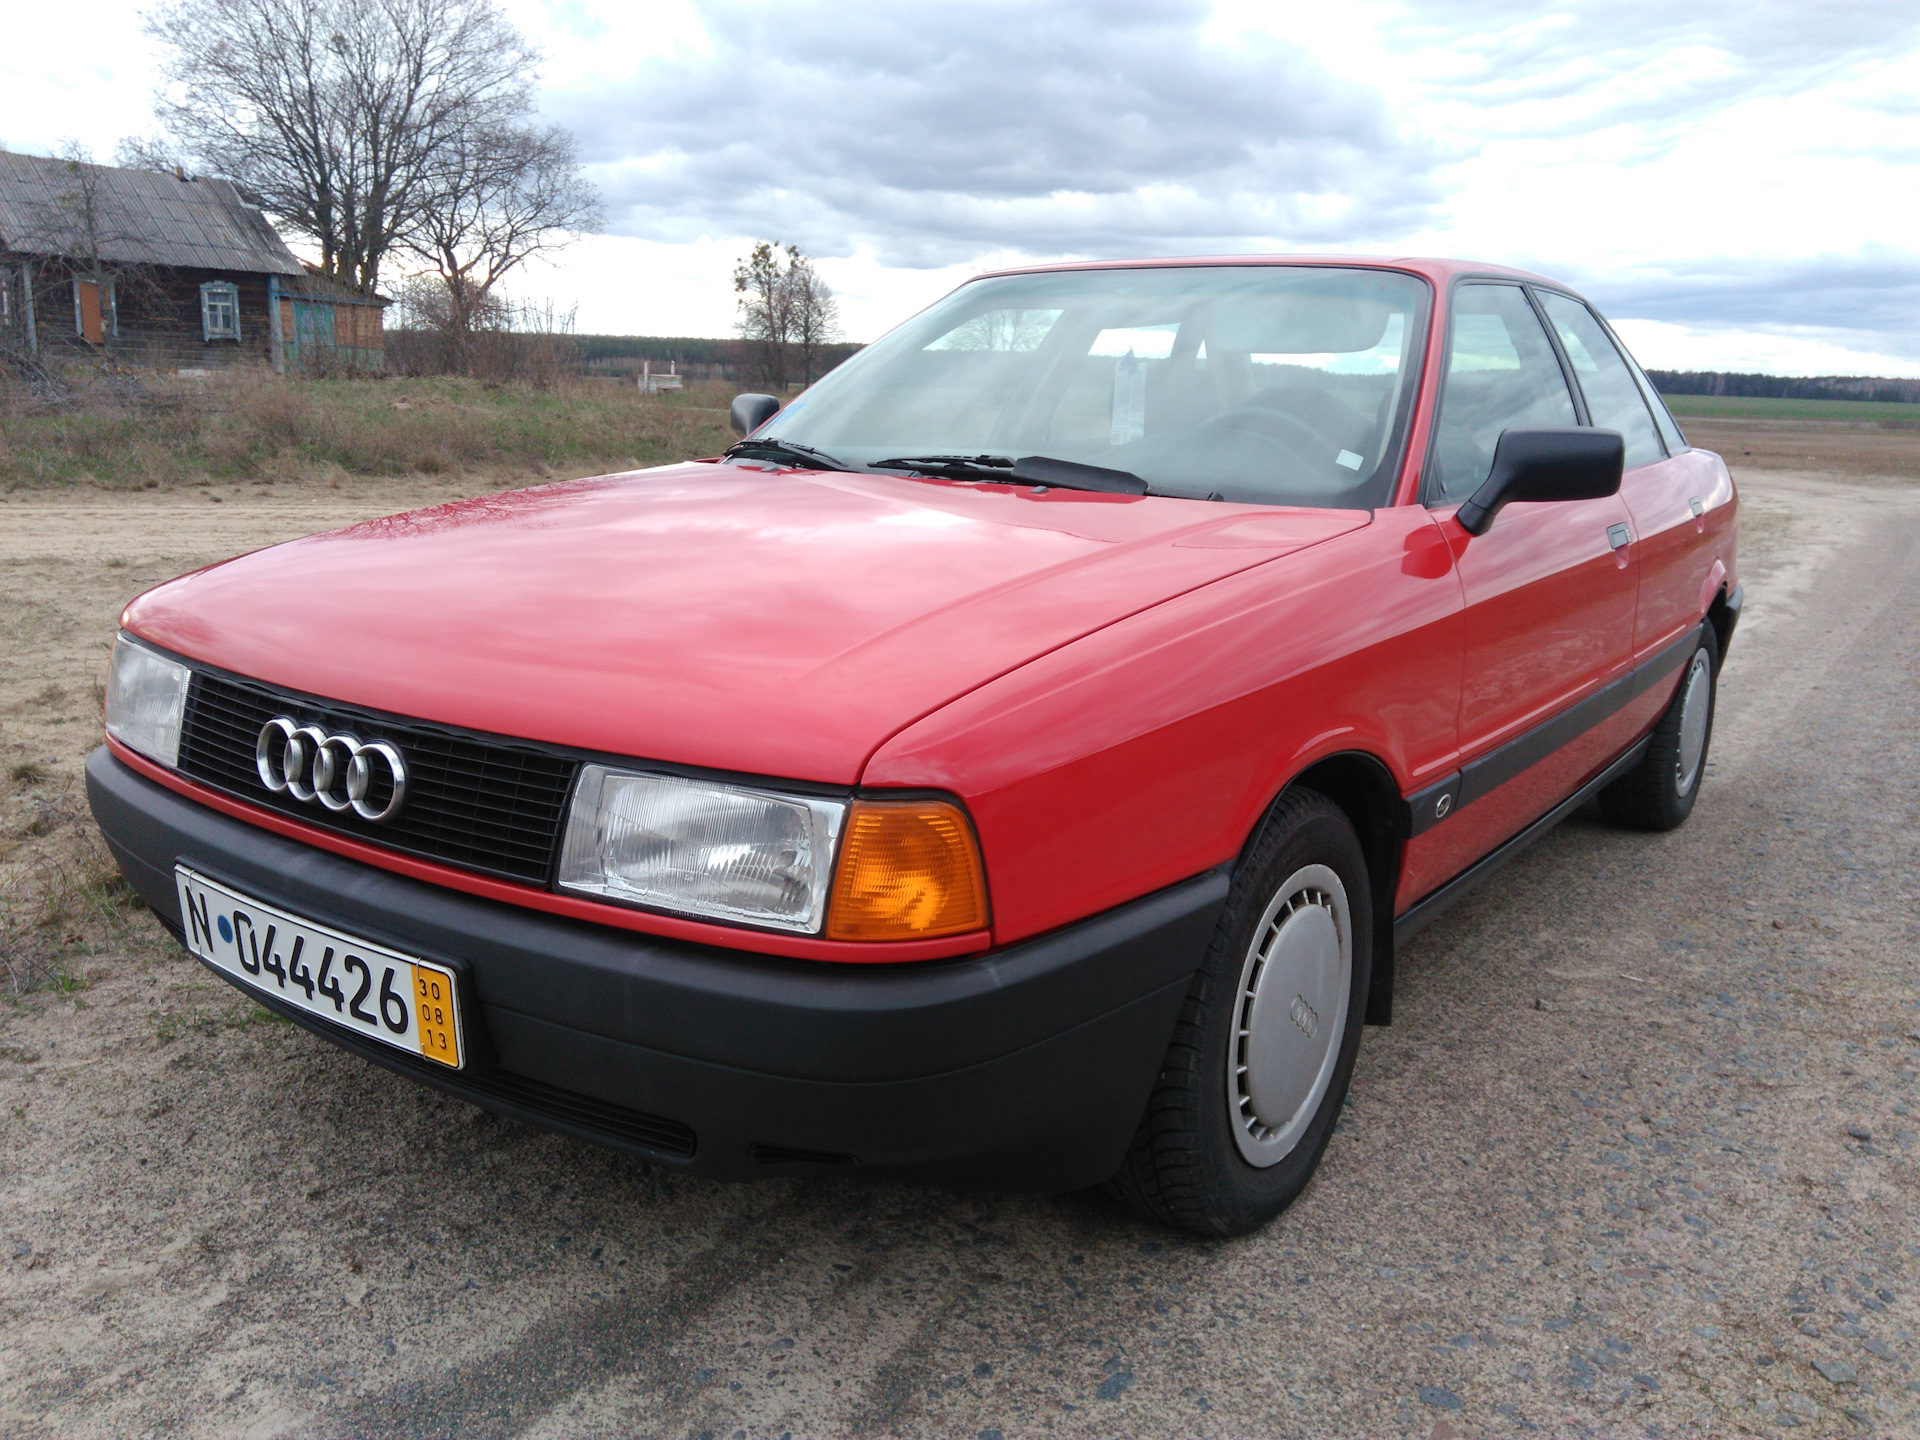 Купить ауди 80 в минске. Audi 80 1990. Audi 80 b2. Ауди 80 в кузове в3. Ауди 100 b3.